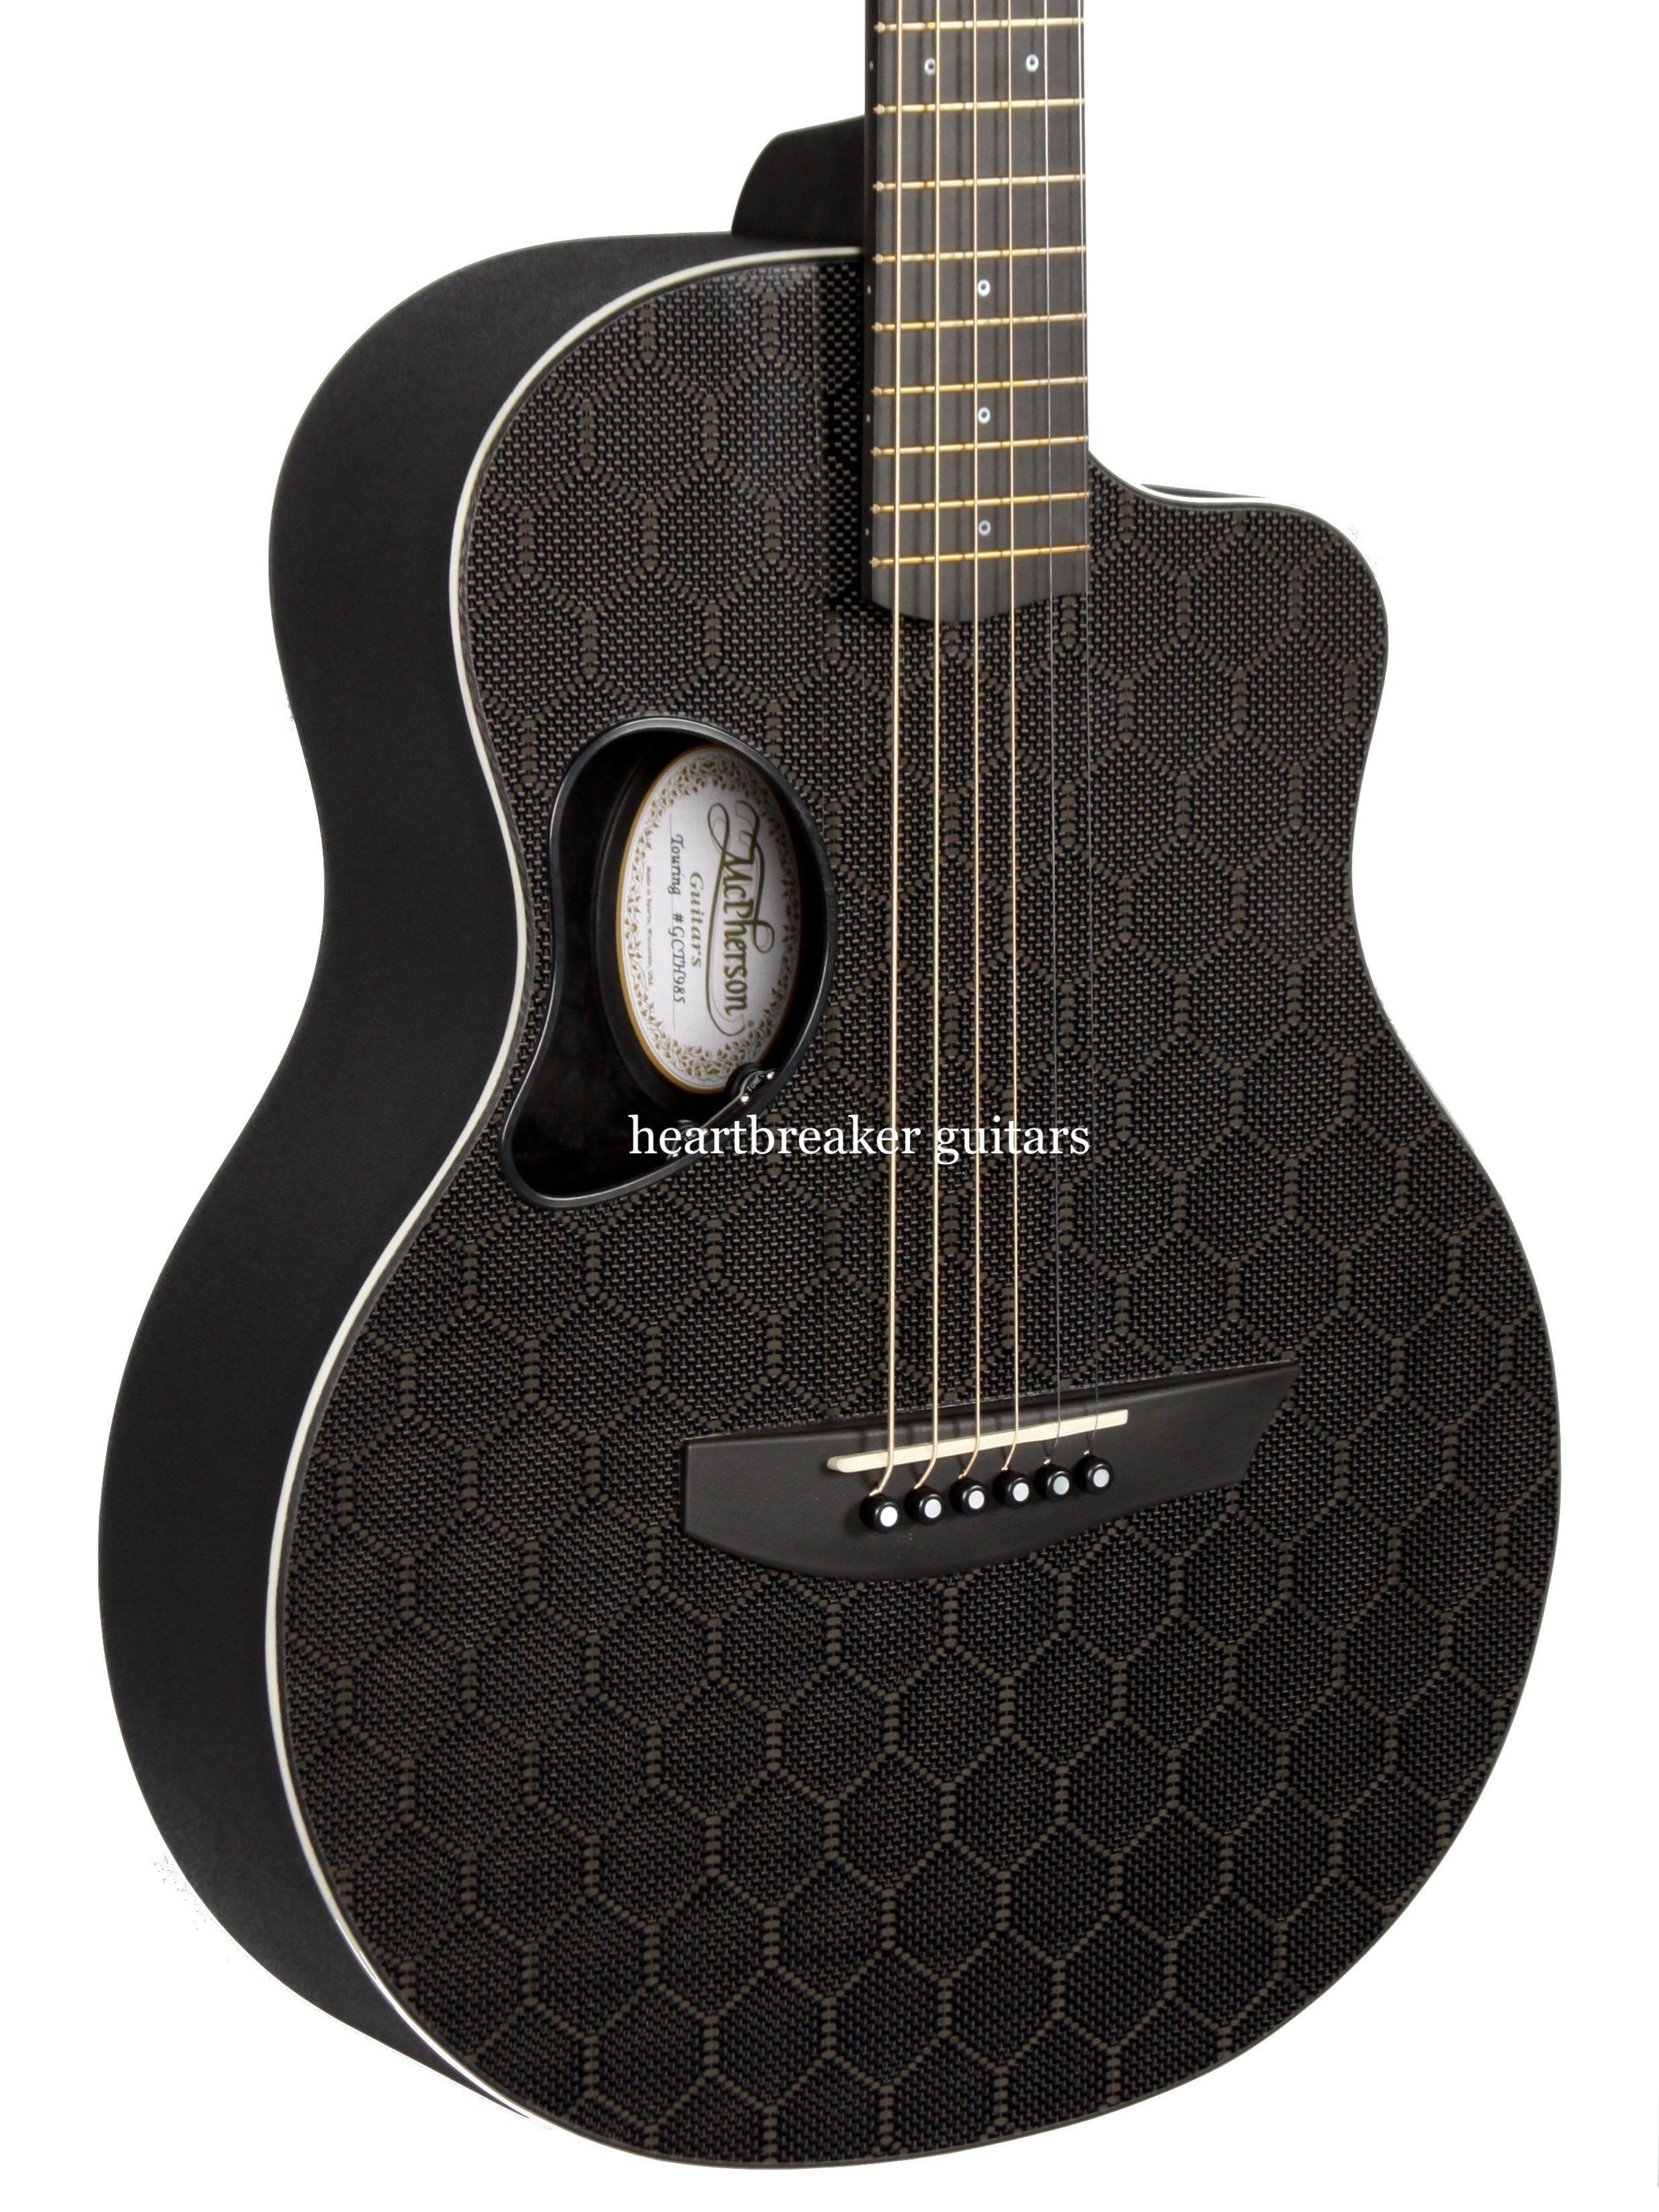 McPherson Carbon Fiber White Trim Touring Gold Hardware - McPherson Guitars - Heartbreaker Guitars